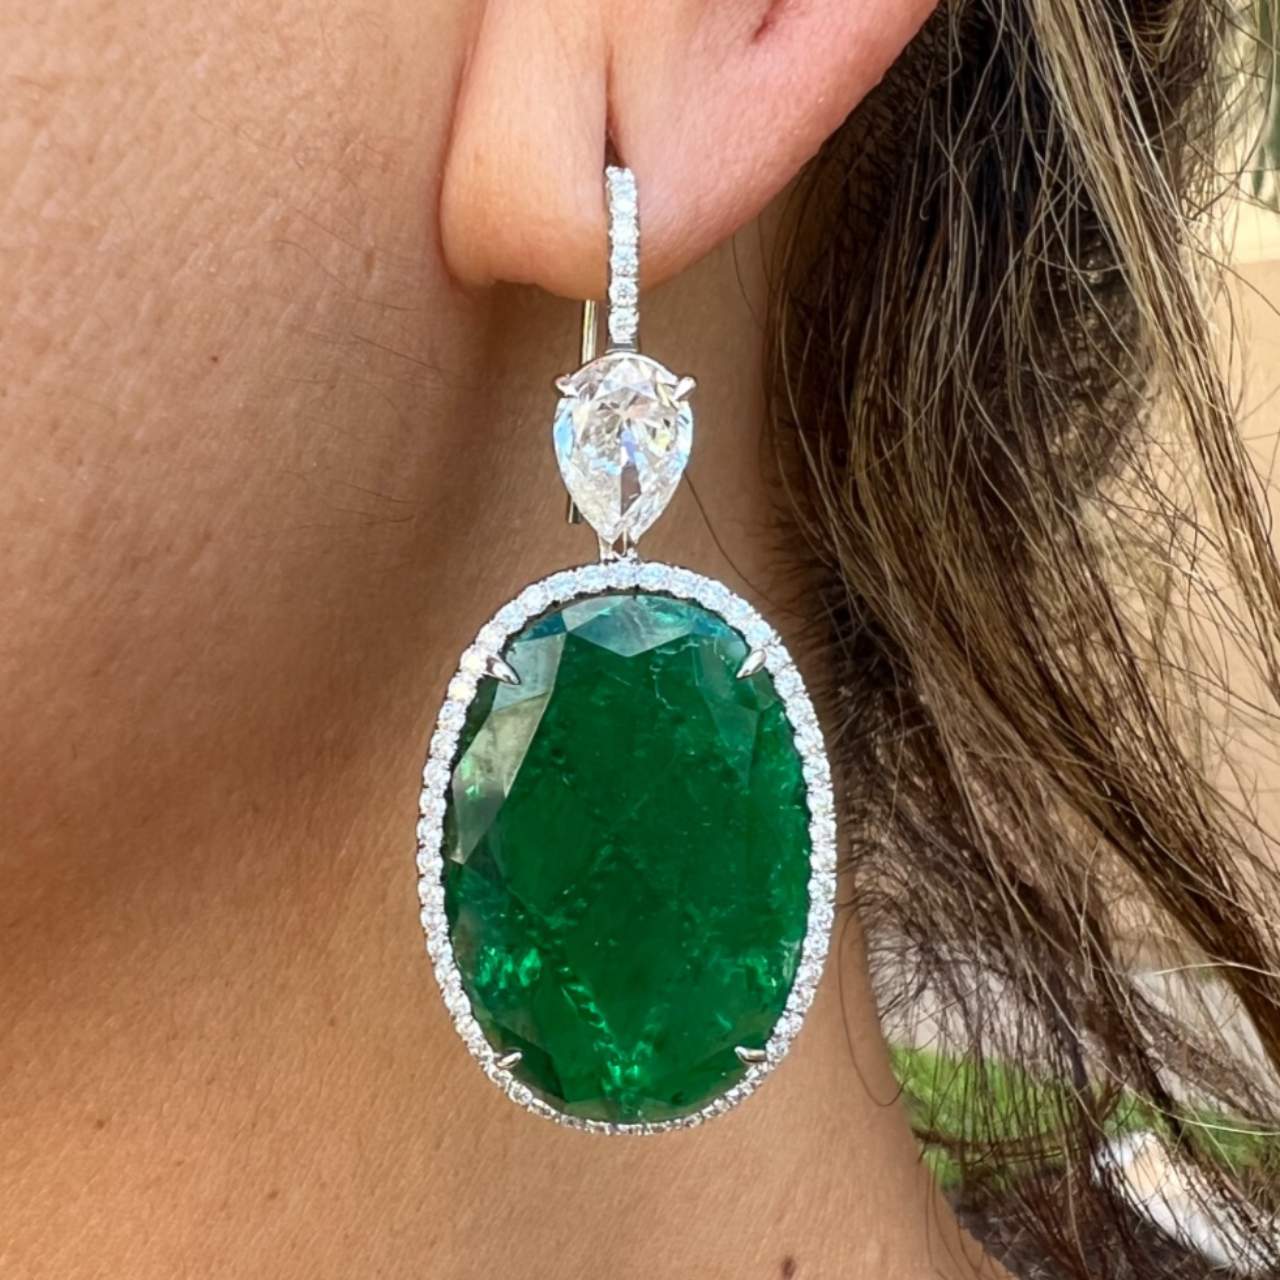 1990s Platinum Emerald & Diamond Earrings worn on ear